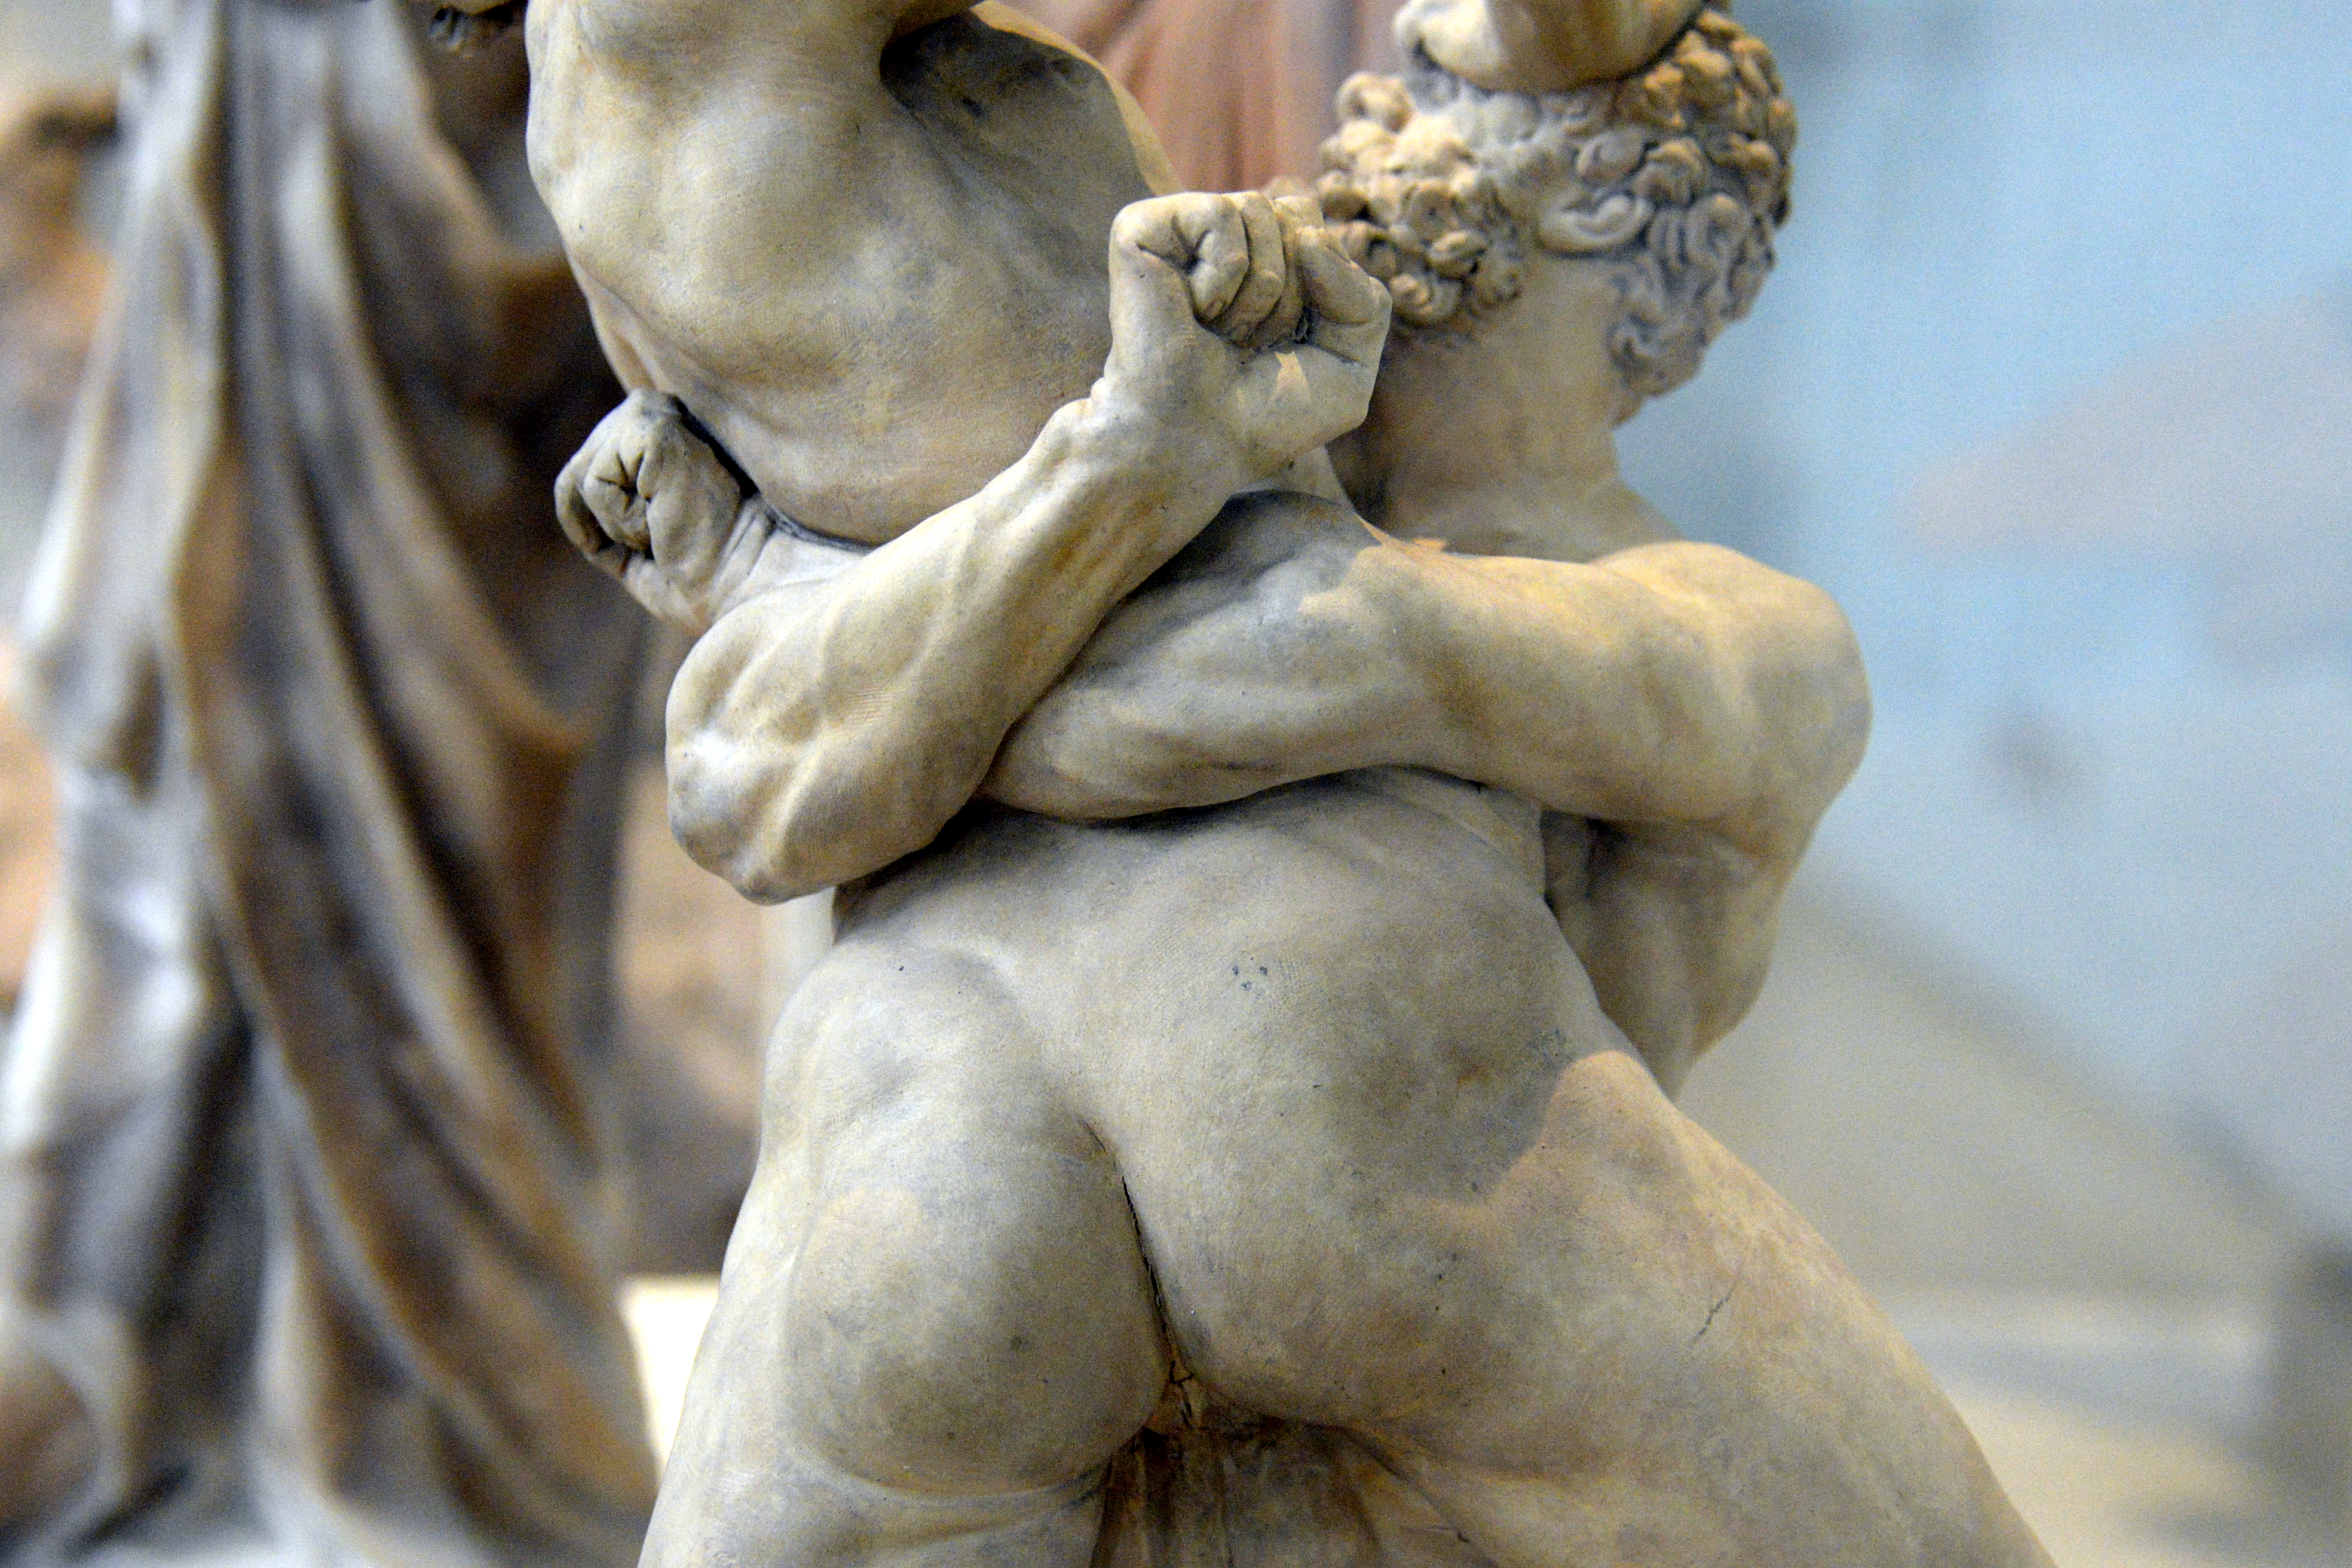 Hercules and Antaeus statue